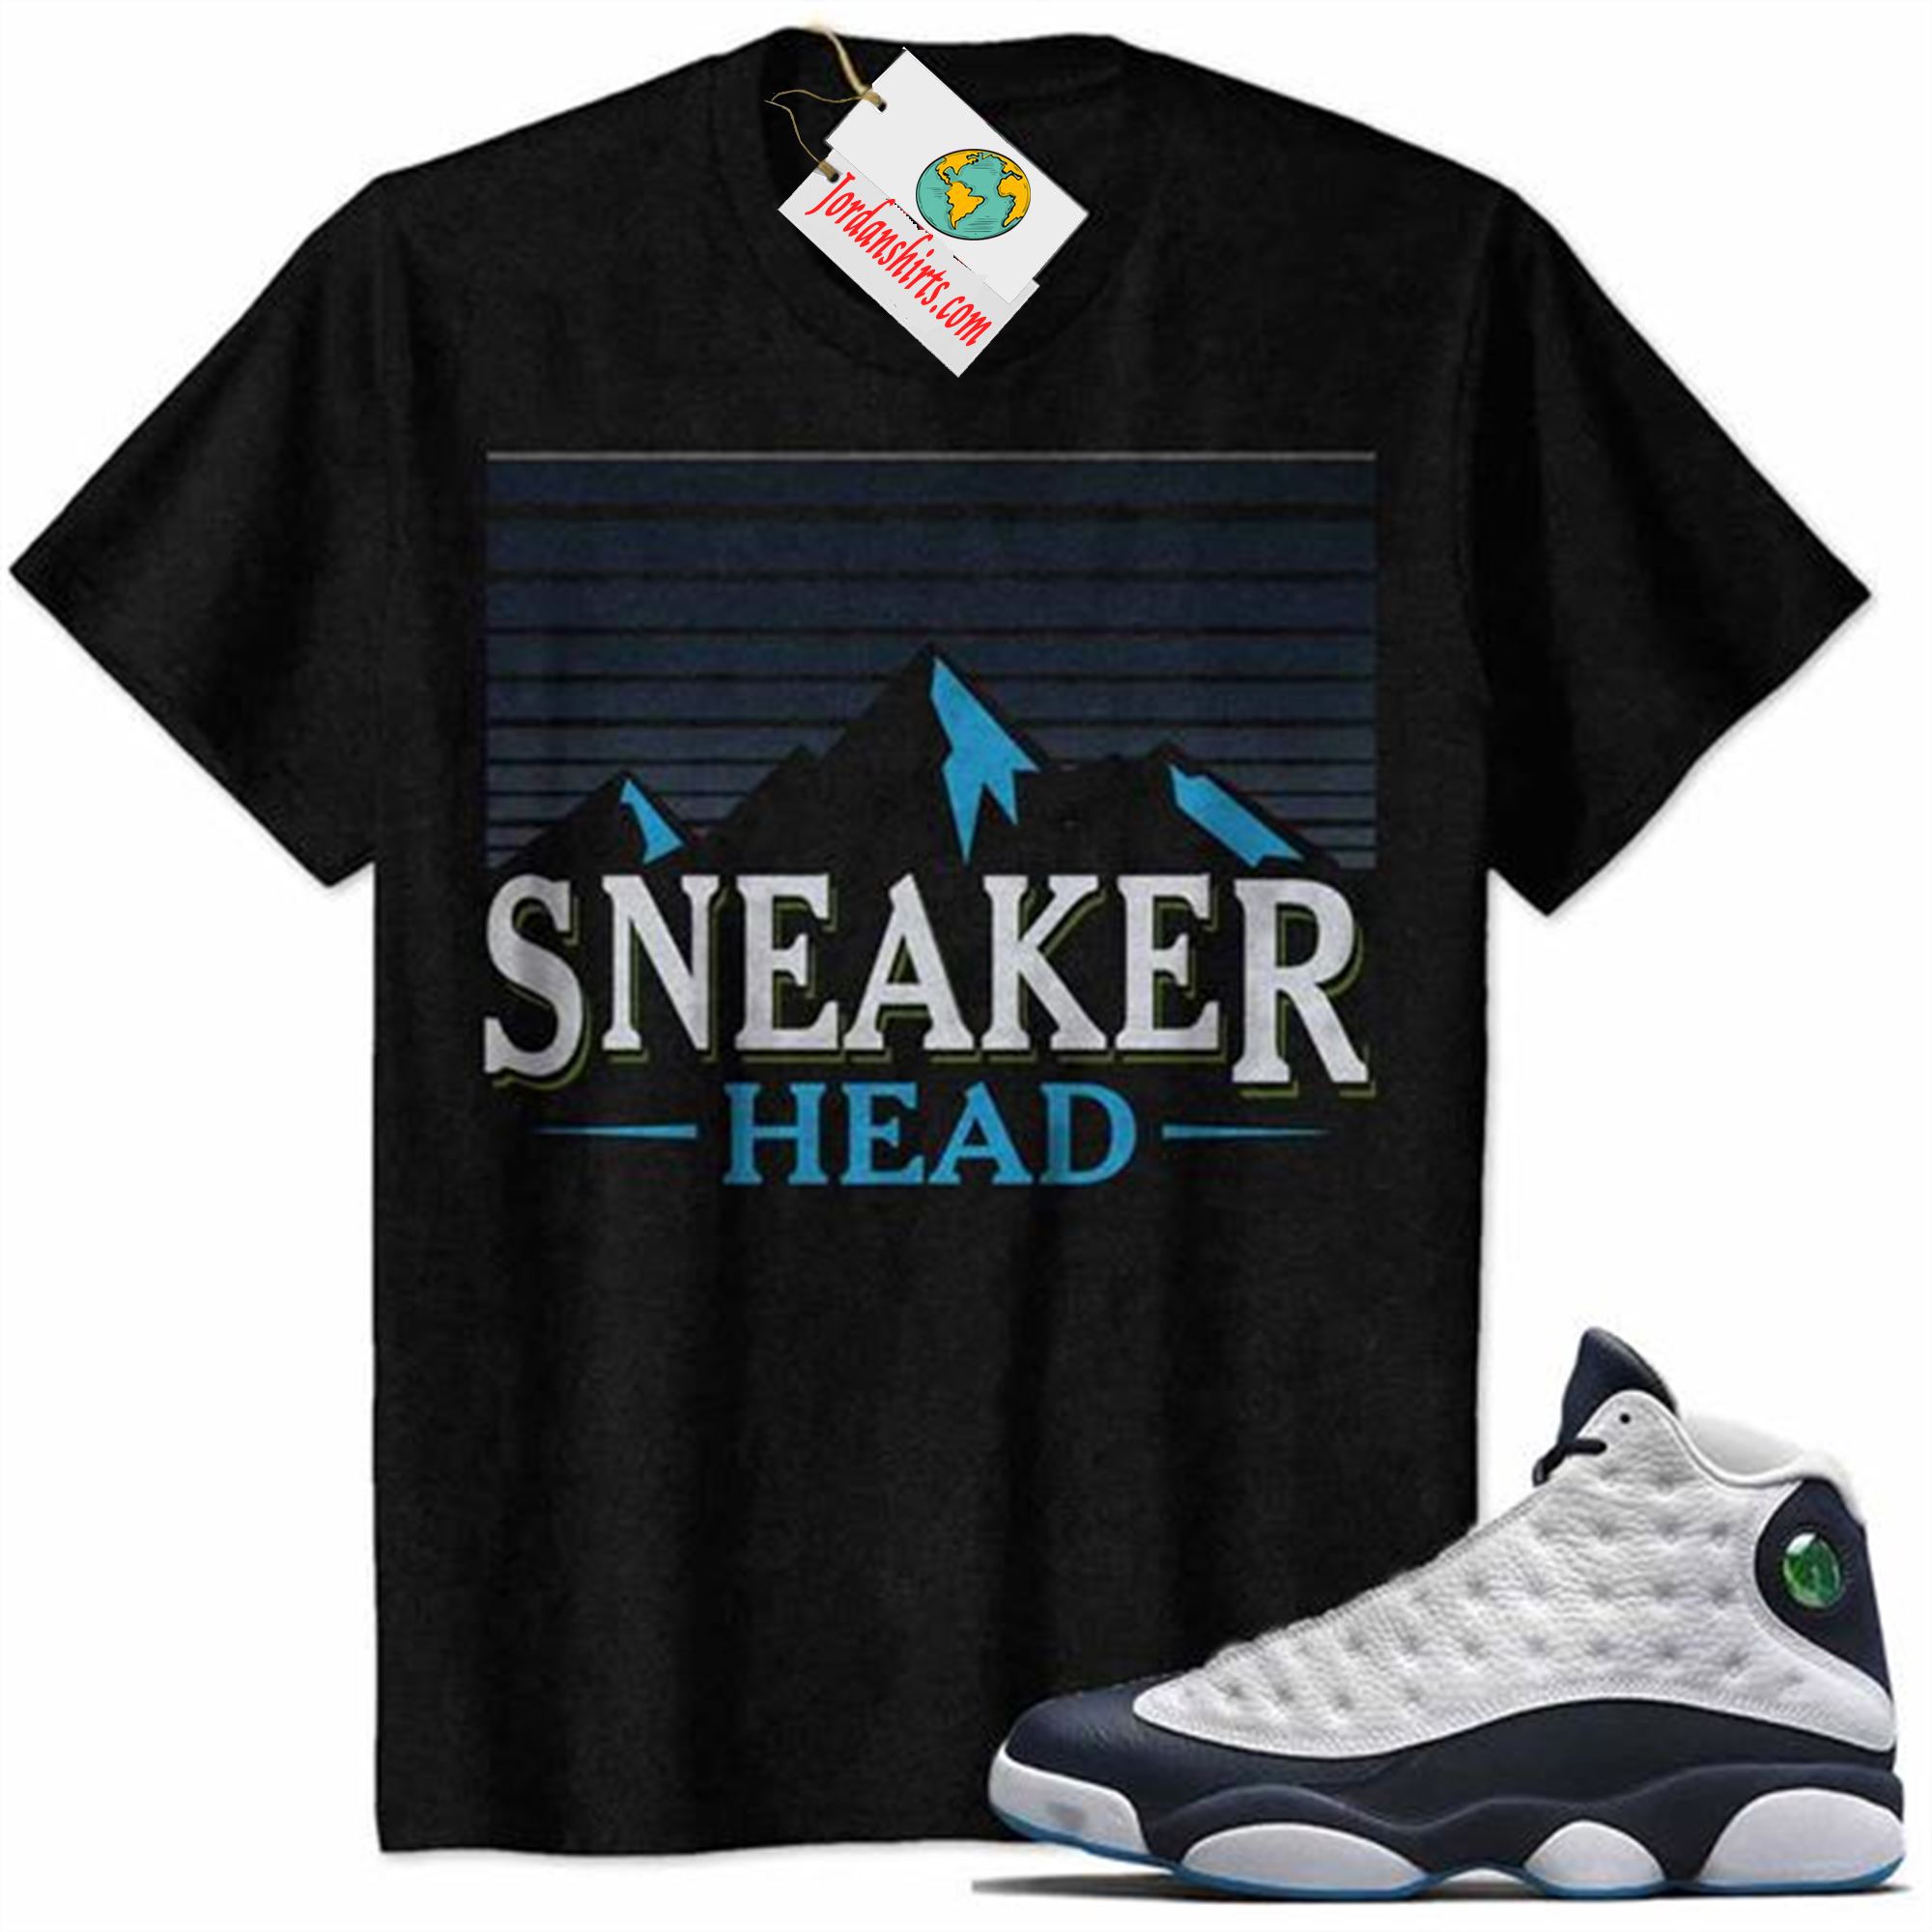 Jordan 13 Shirt, Sneaker Head Vintage Black Air Jordan 13 Obsidian 13s Plus Size Up To 5xl